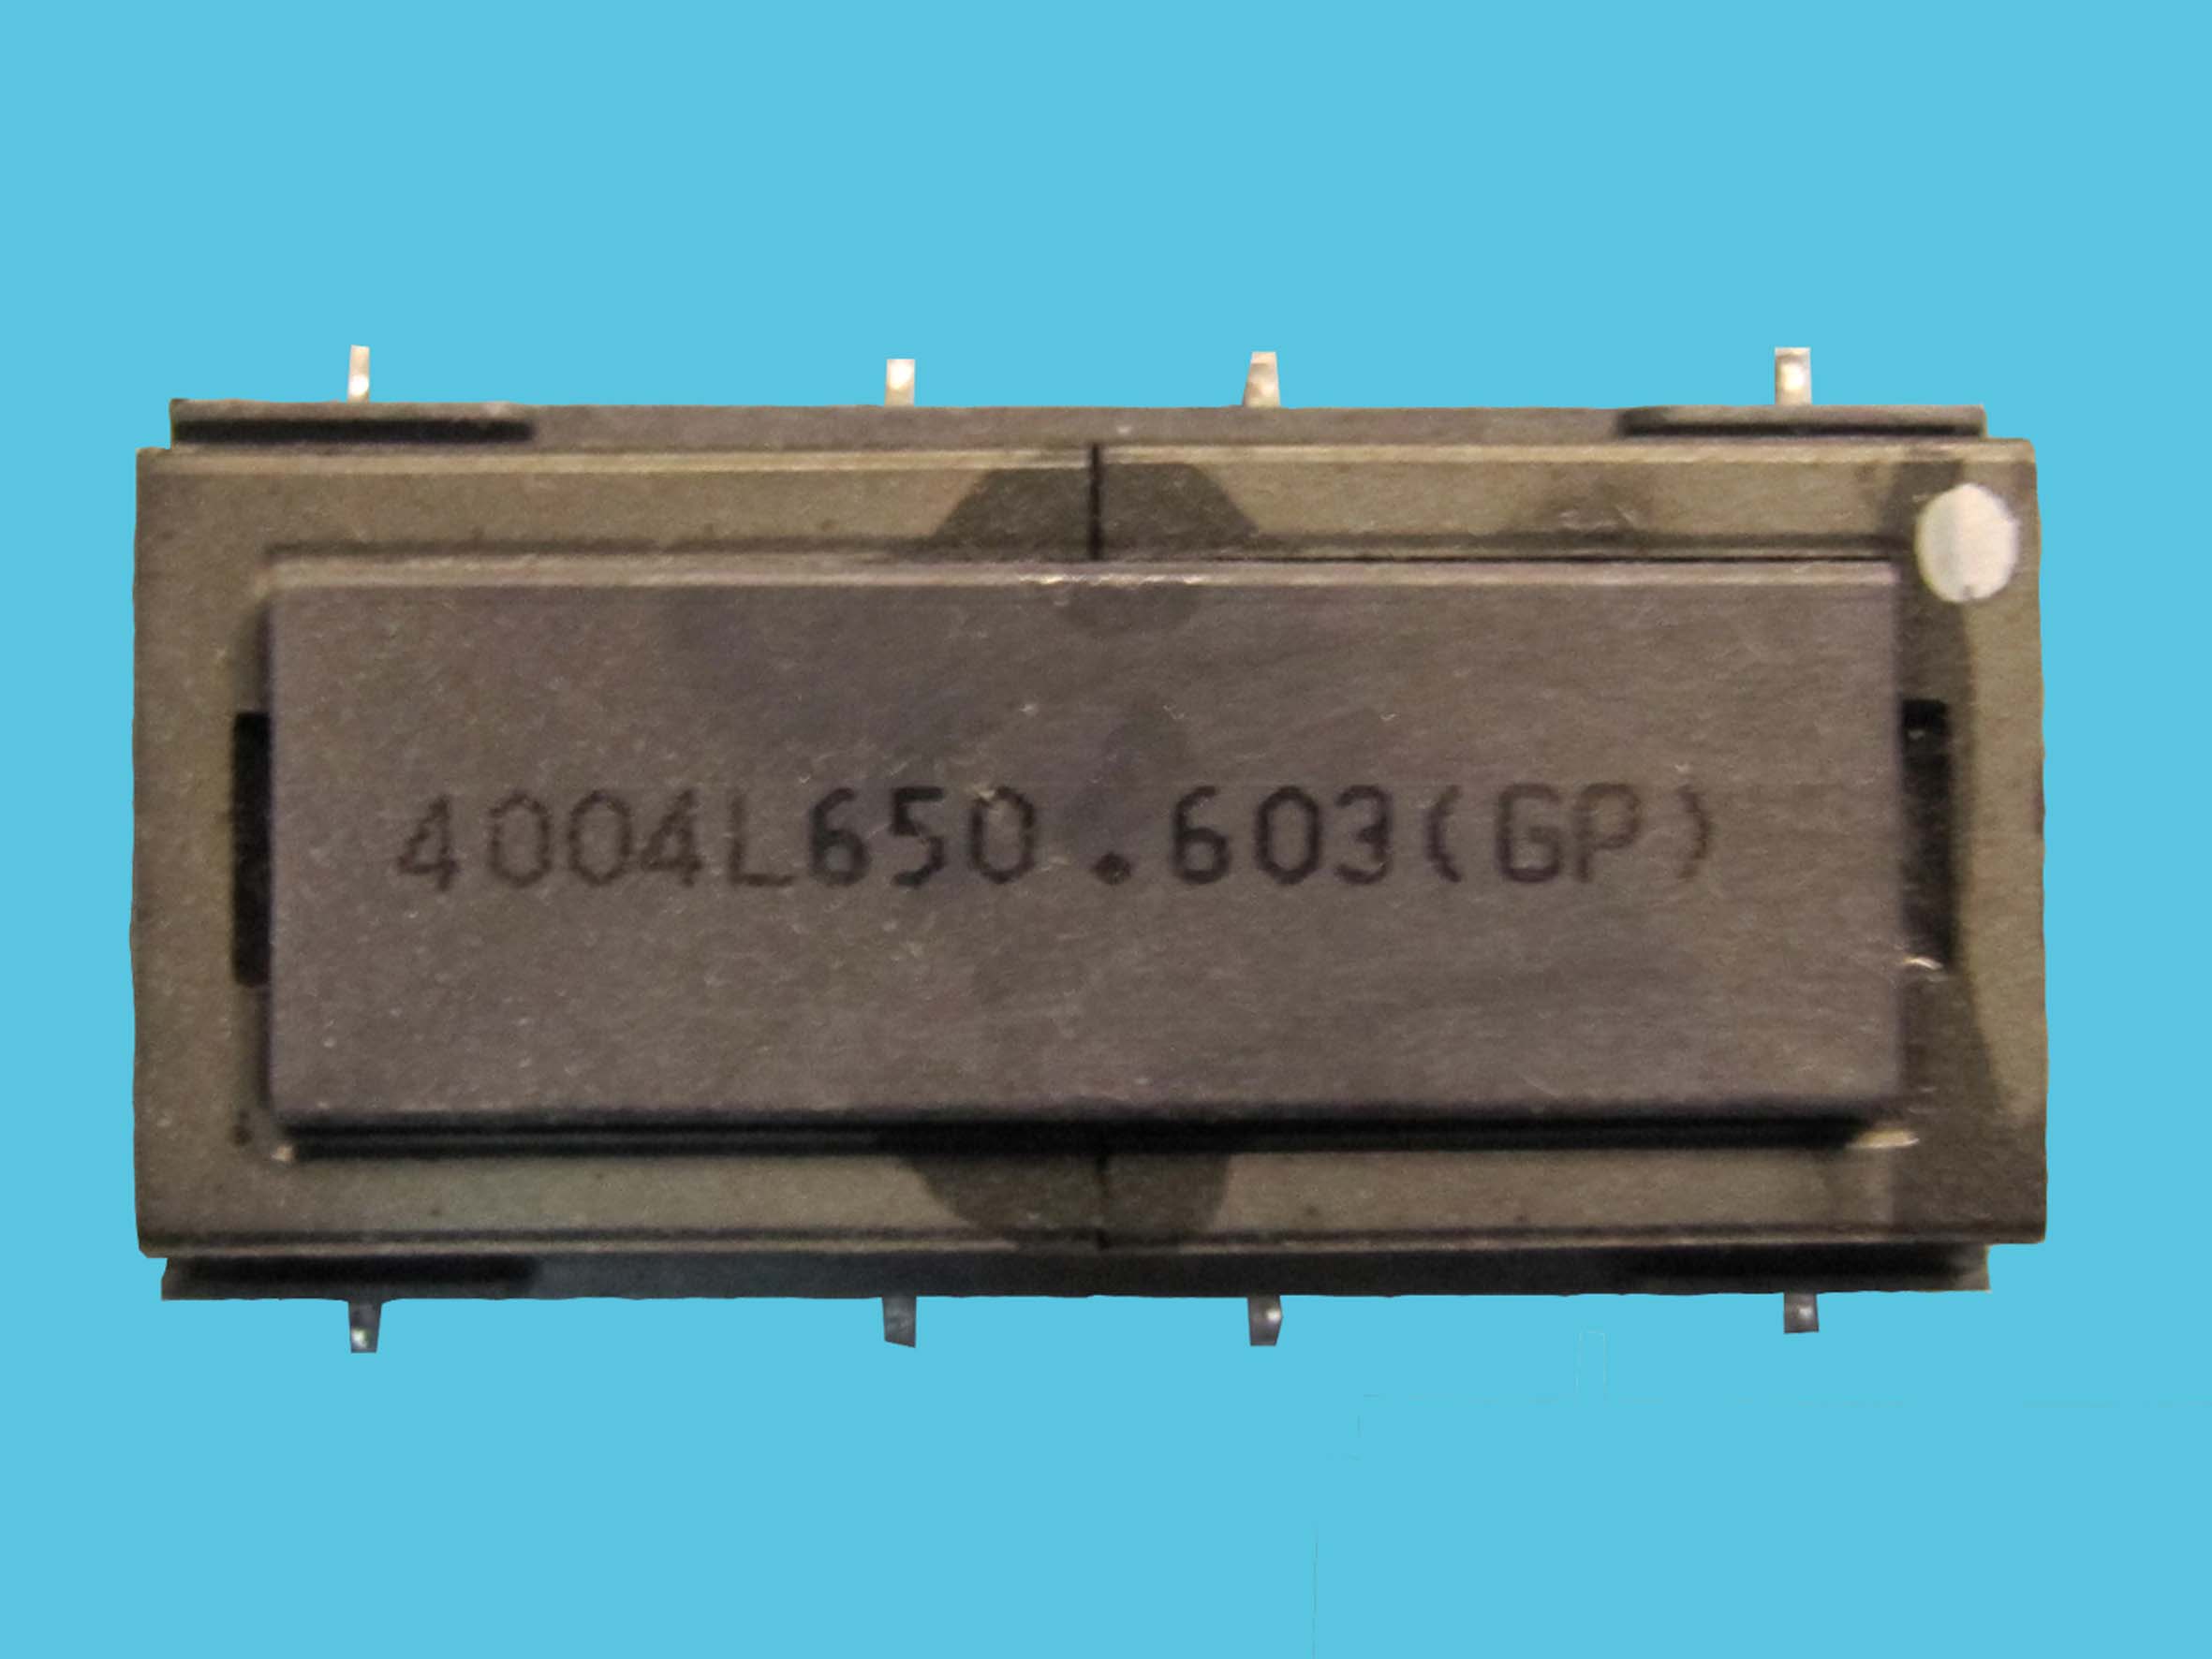 Transformador inverter 4004L - IE40007 - FERSAY